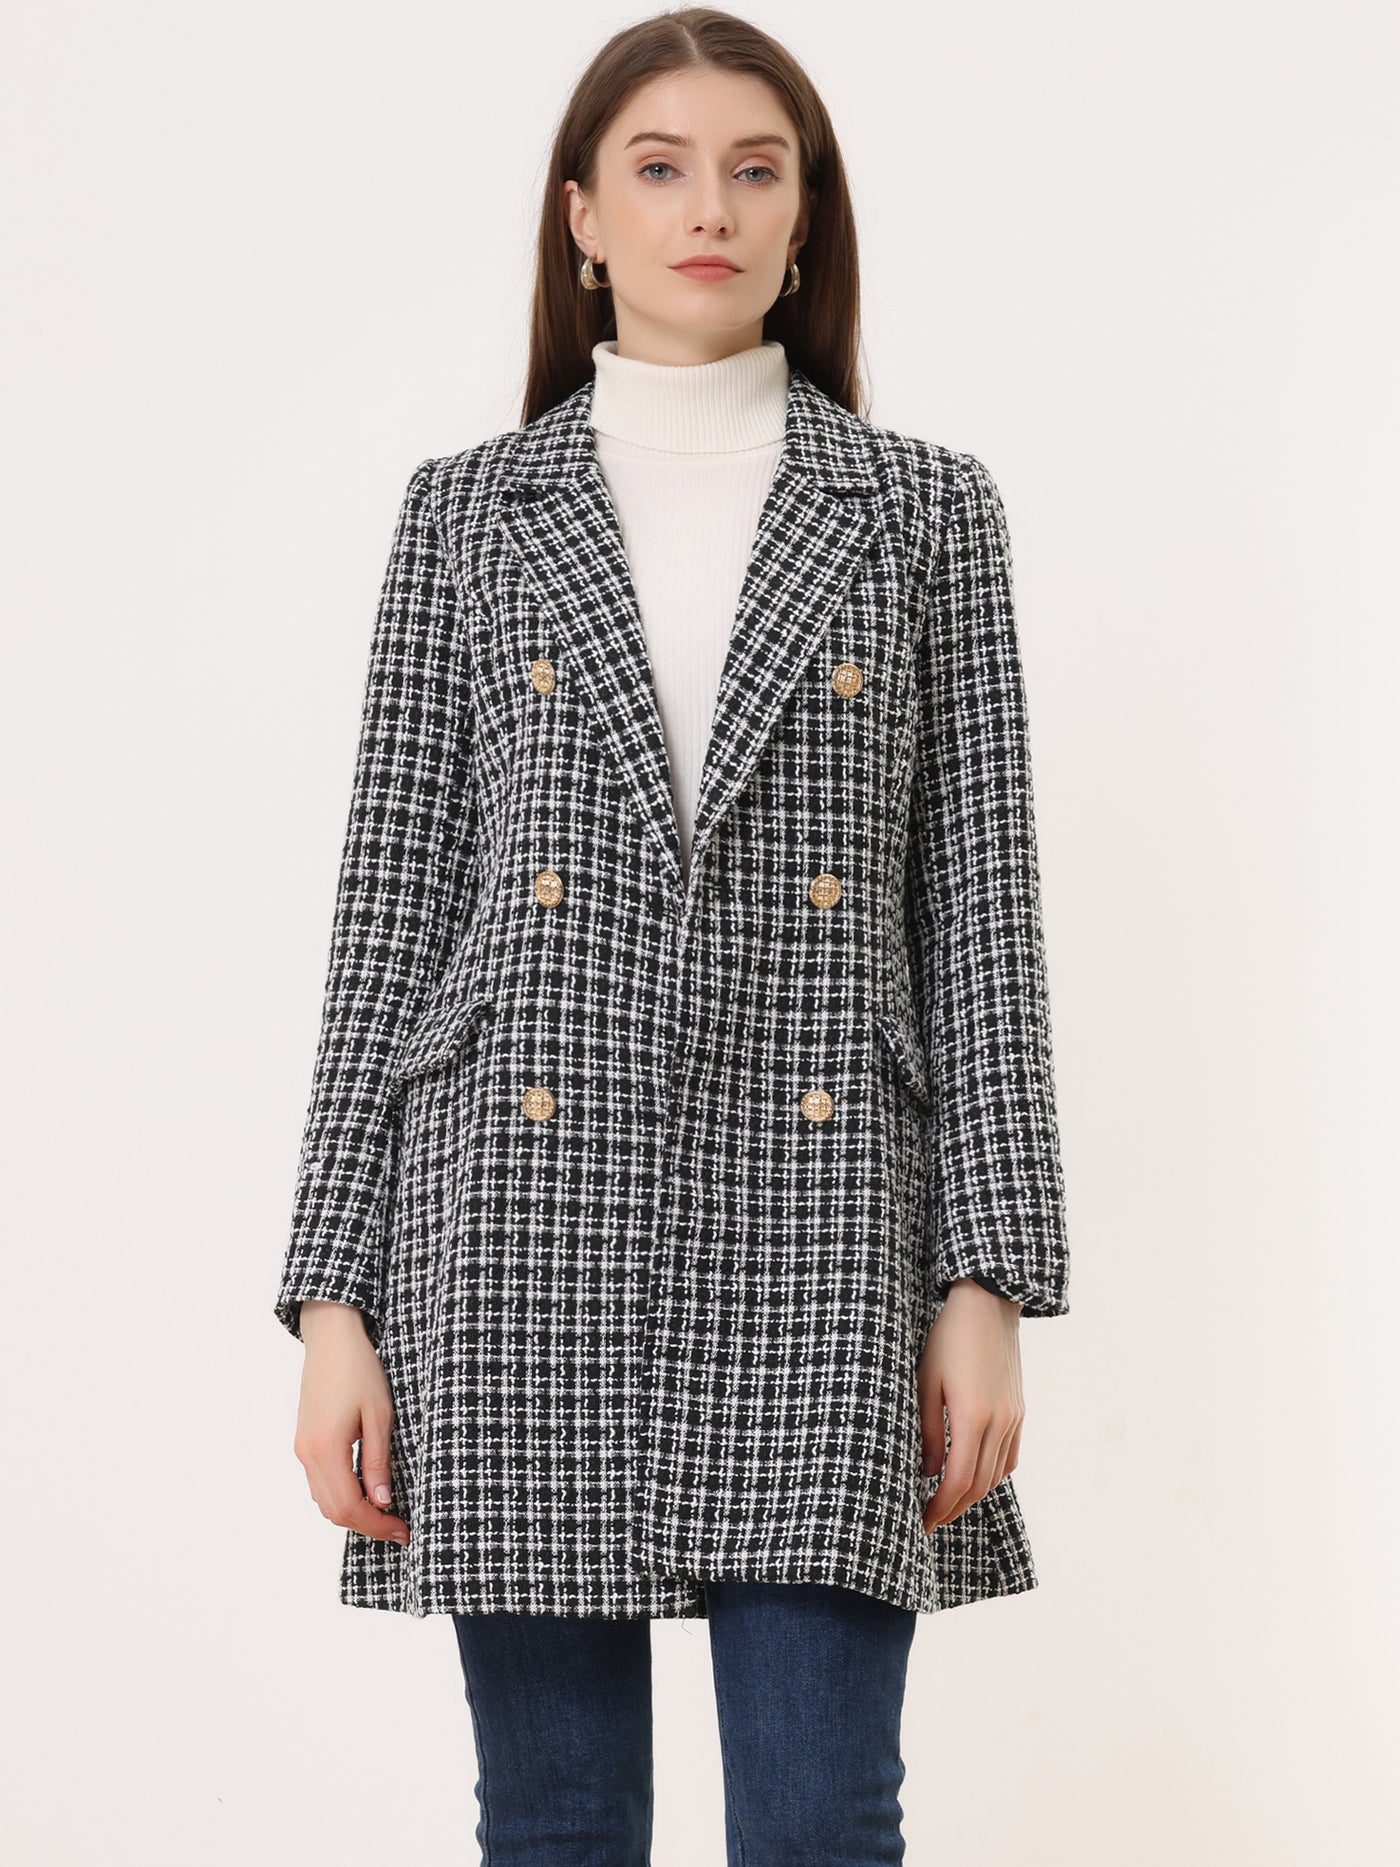 Allegra K Lapel Collar Elegant Double Breasted Plaid Tweed Blazer Coat